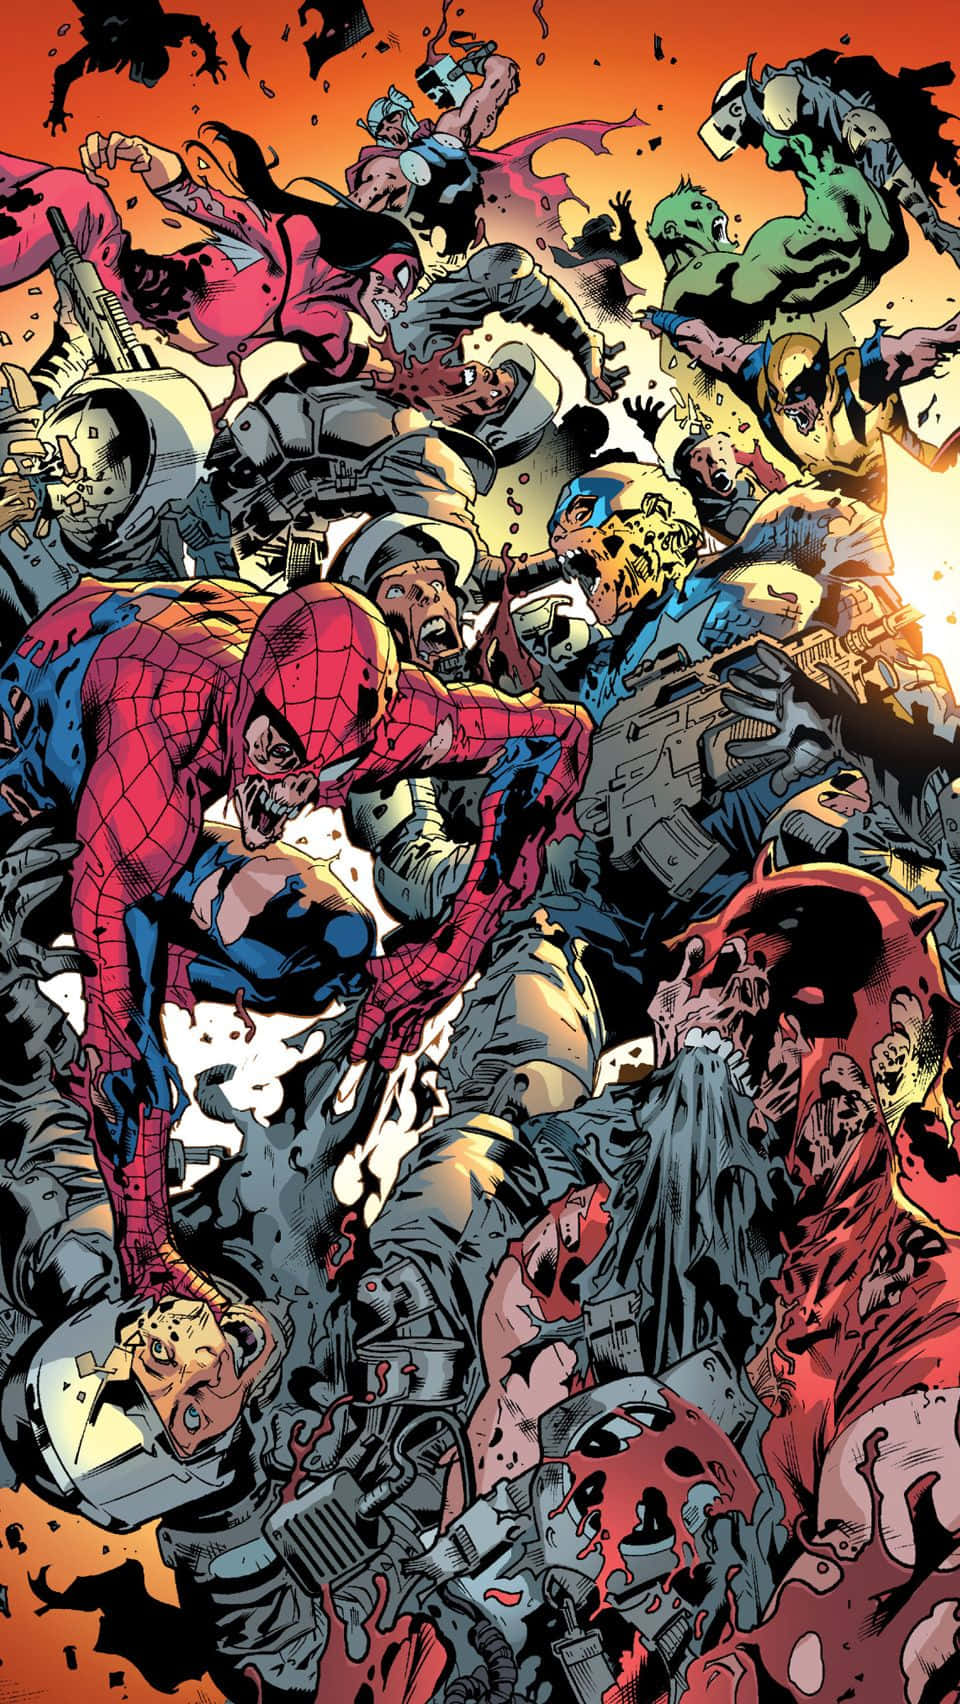 Spider-Man og hans venner kæmper i tegneserien. Wallpaper